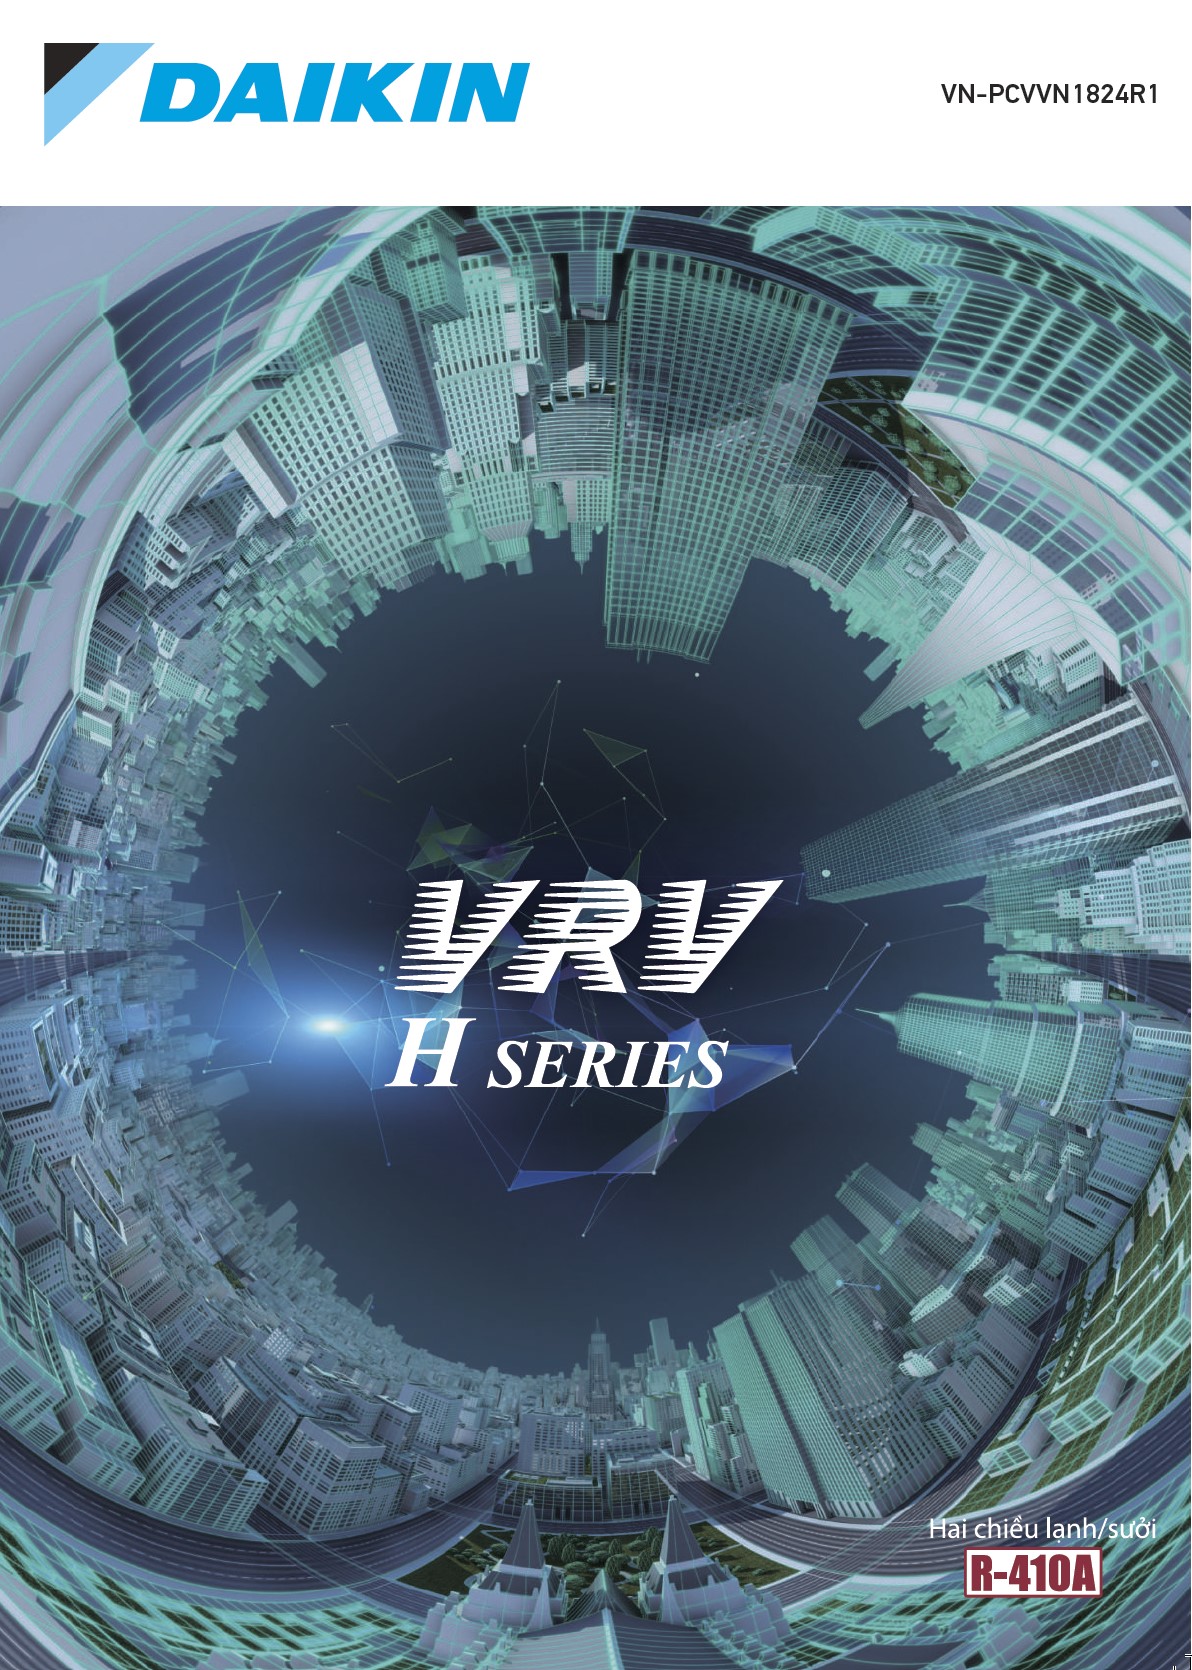 PCVVN1824R1 - VRV H series